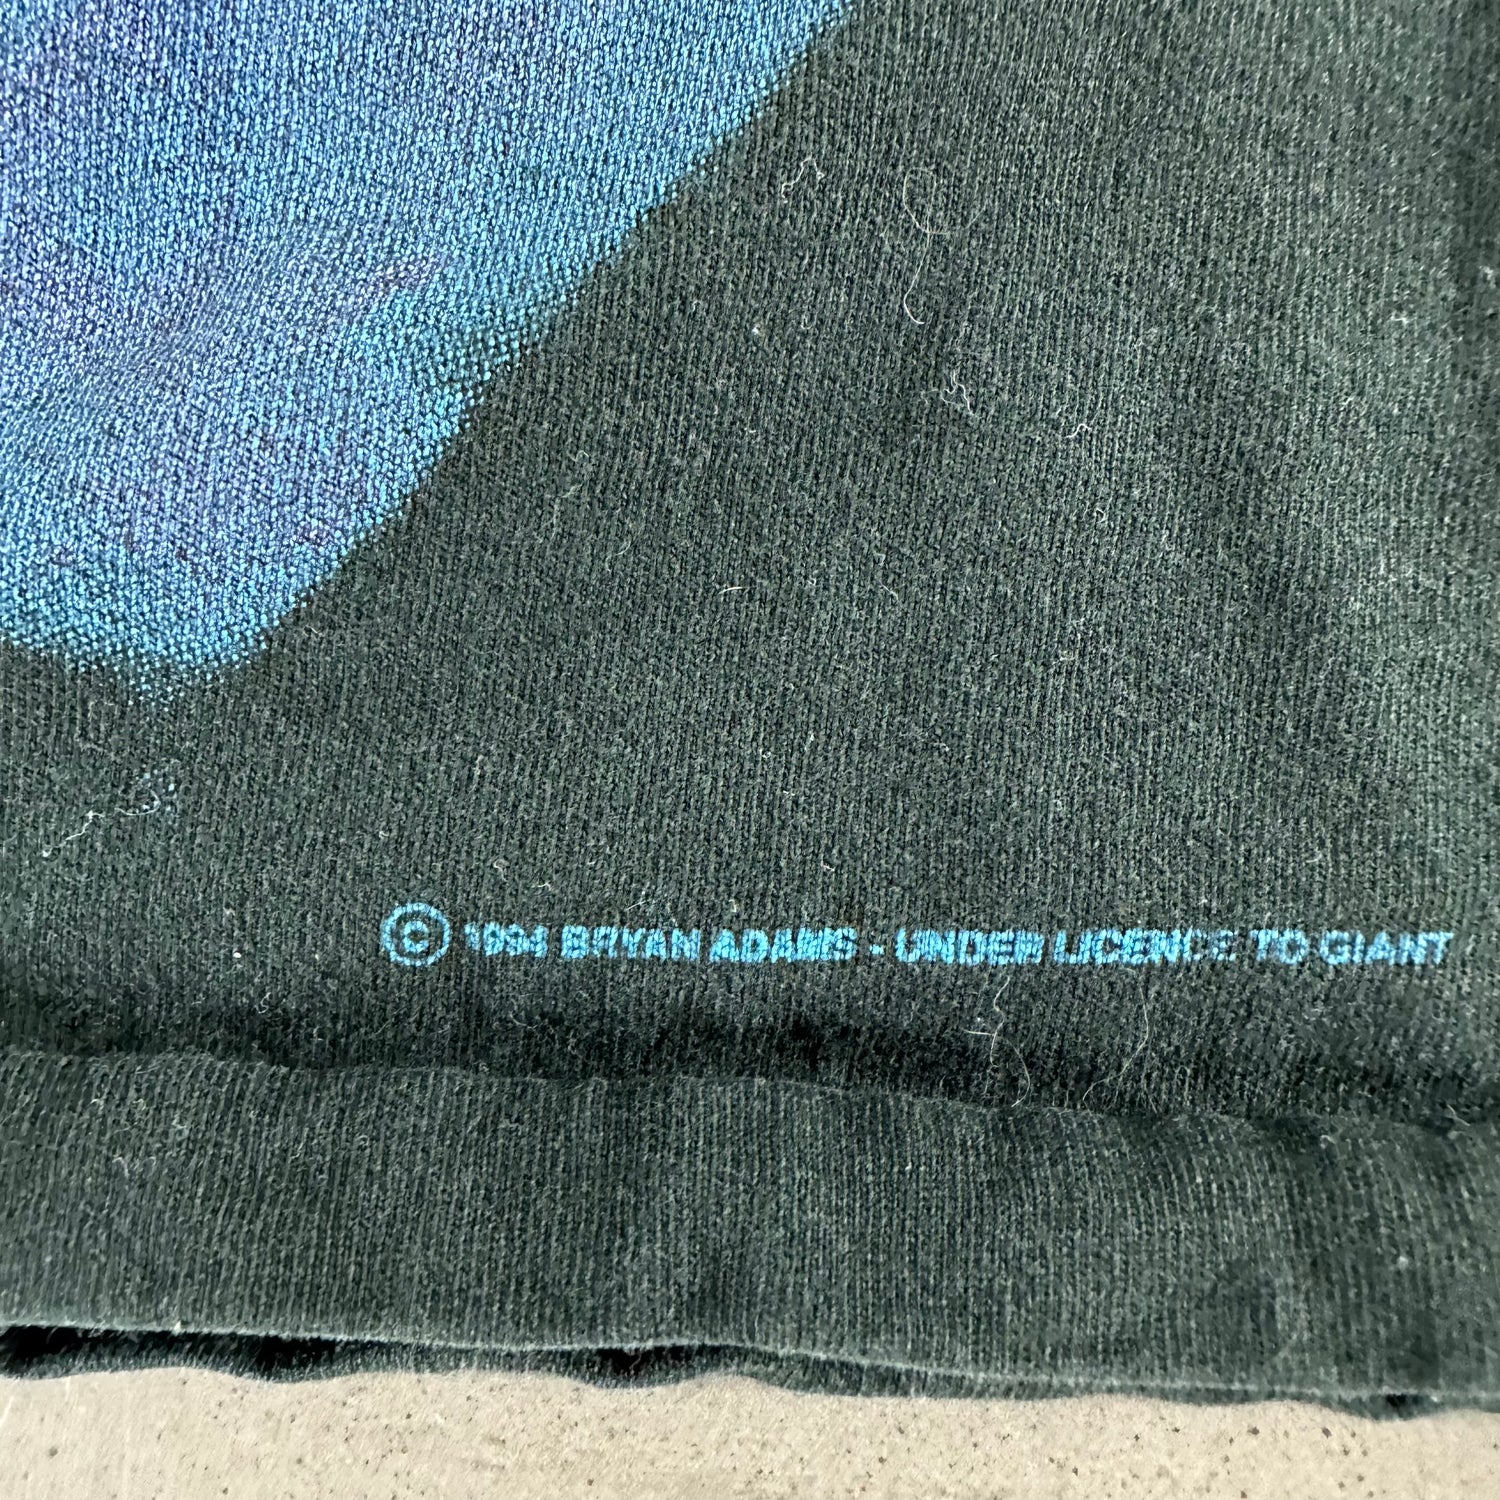 Vintage 1995 Bryan Adams T-shirt size XL